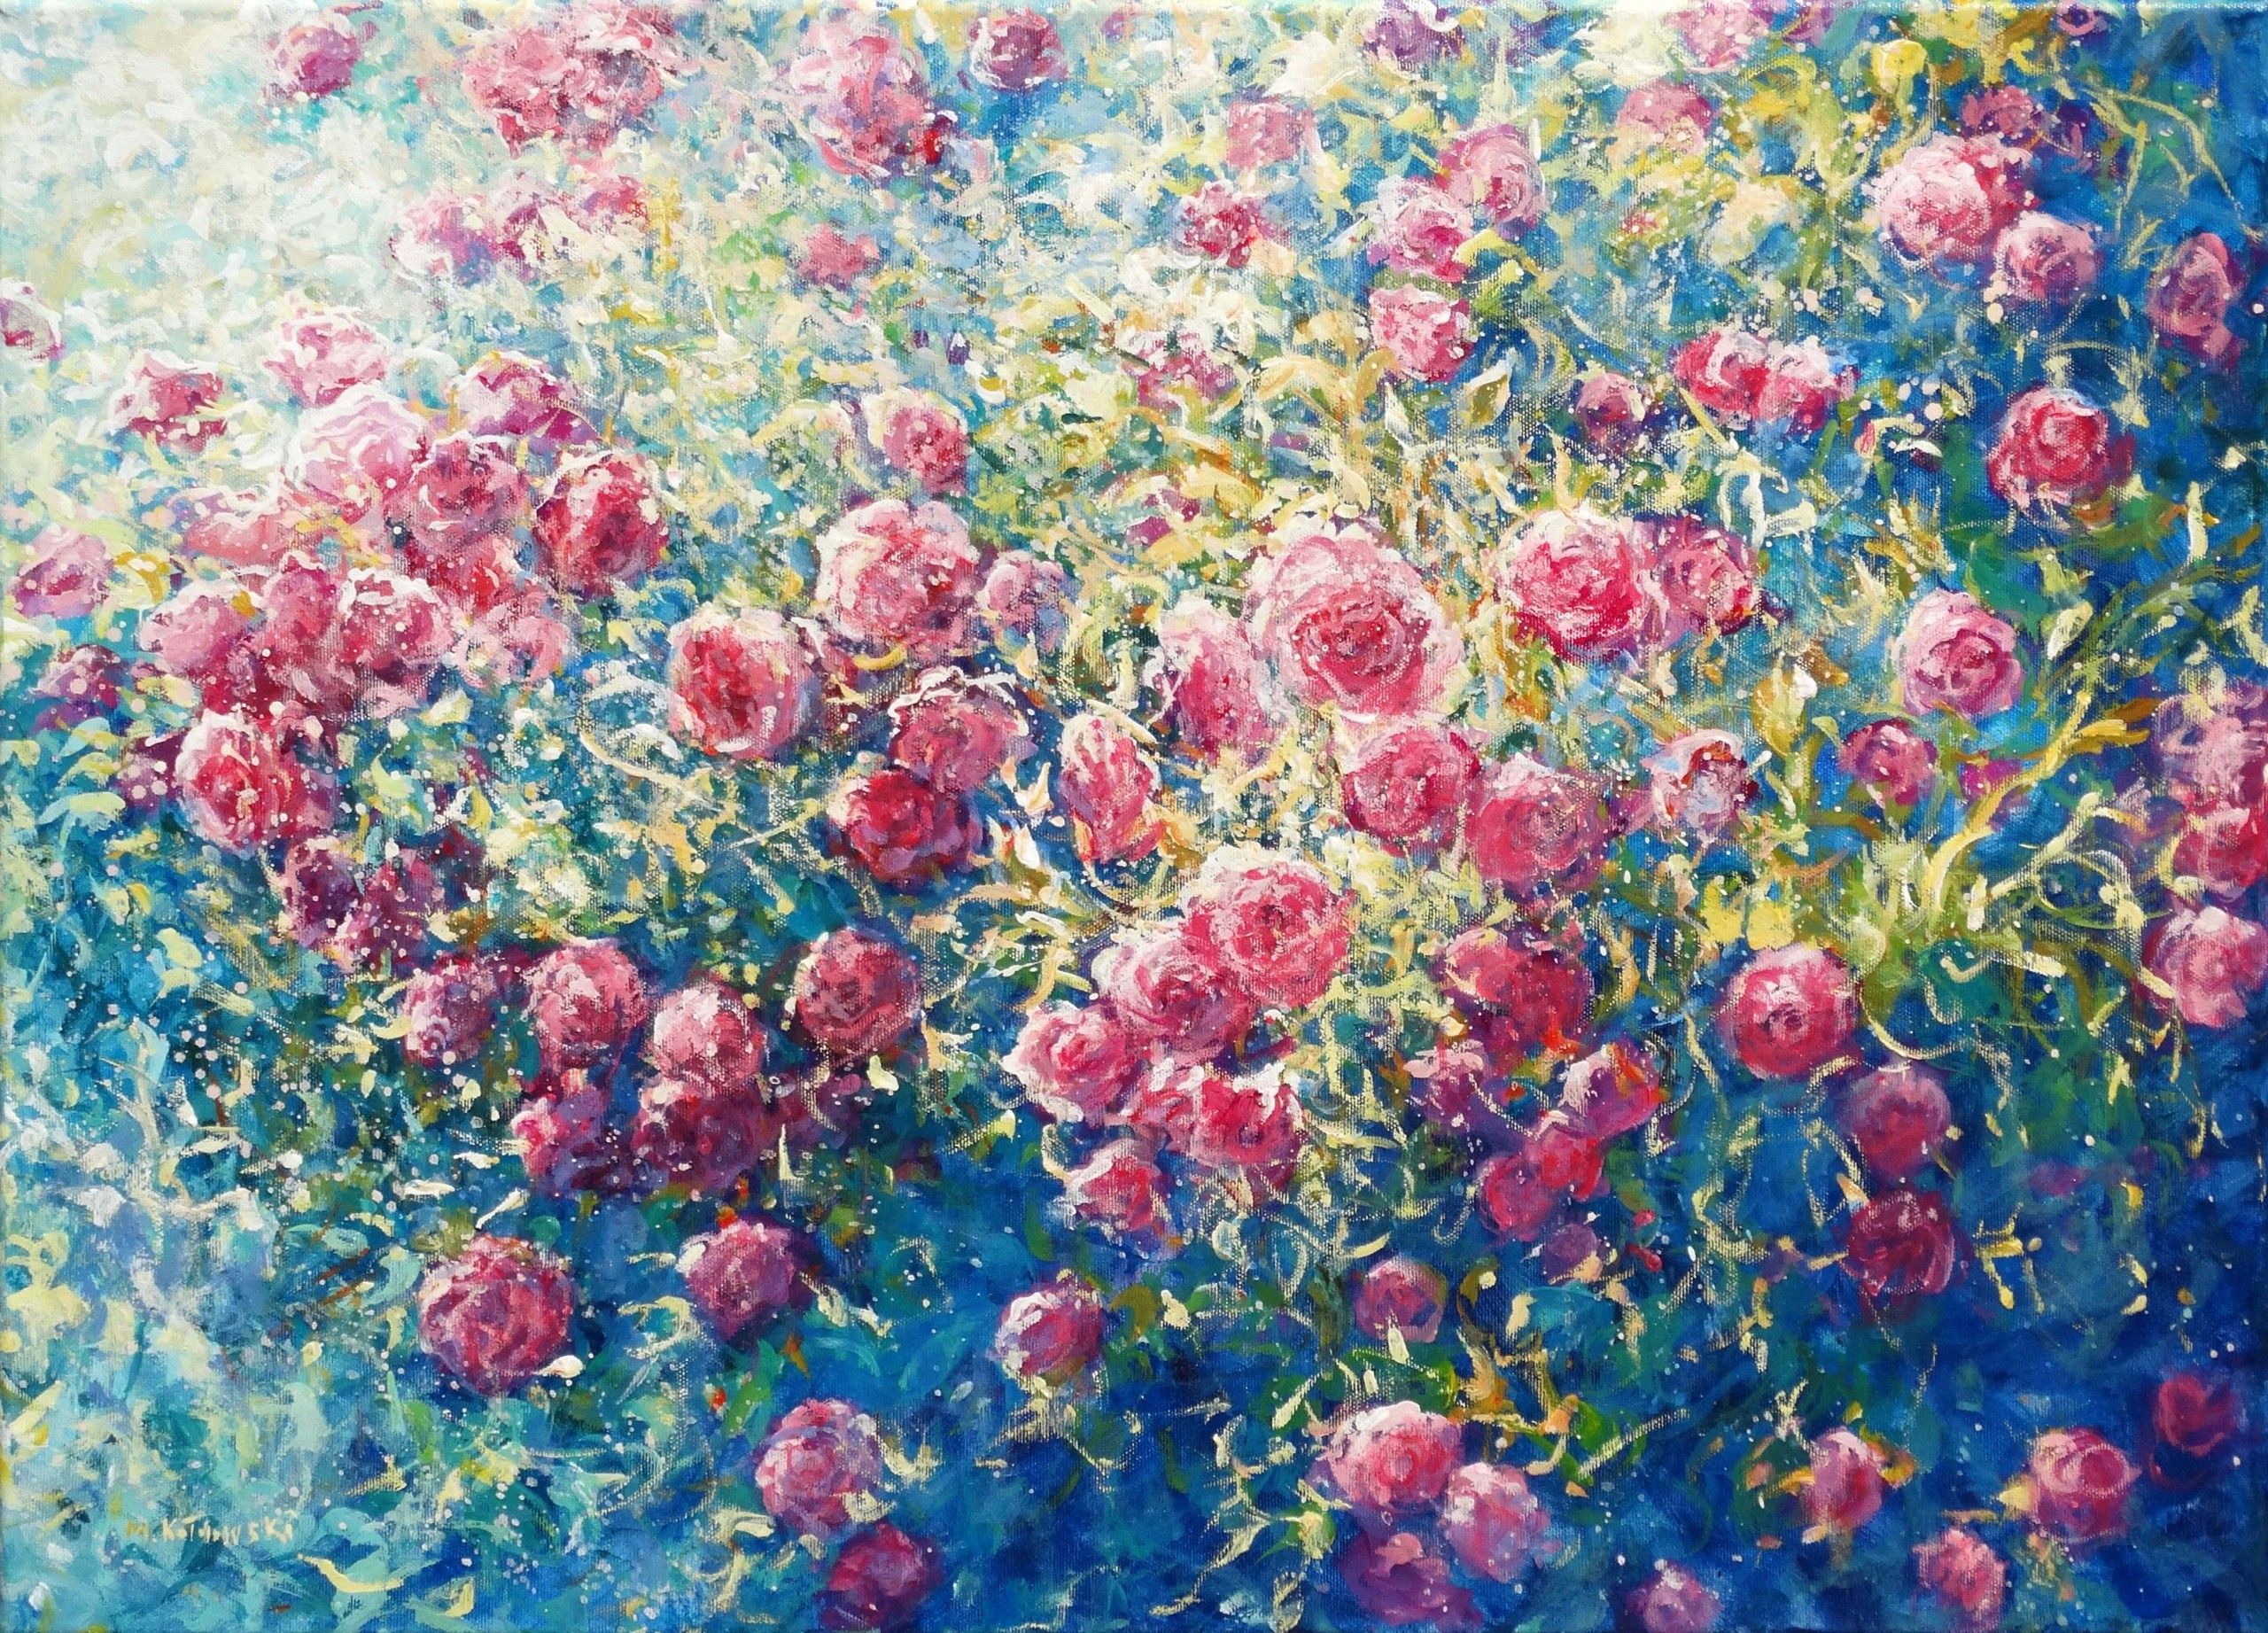 Abundance of Roses by Mariusz Kaldowski